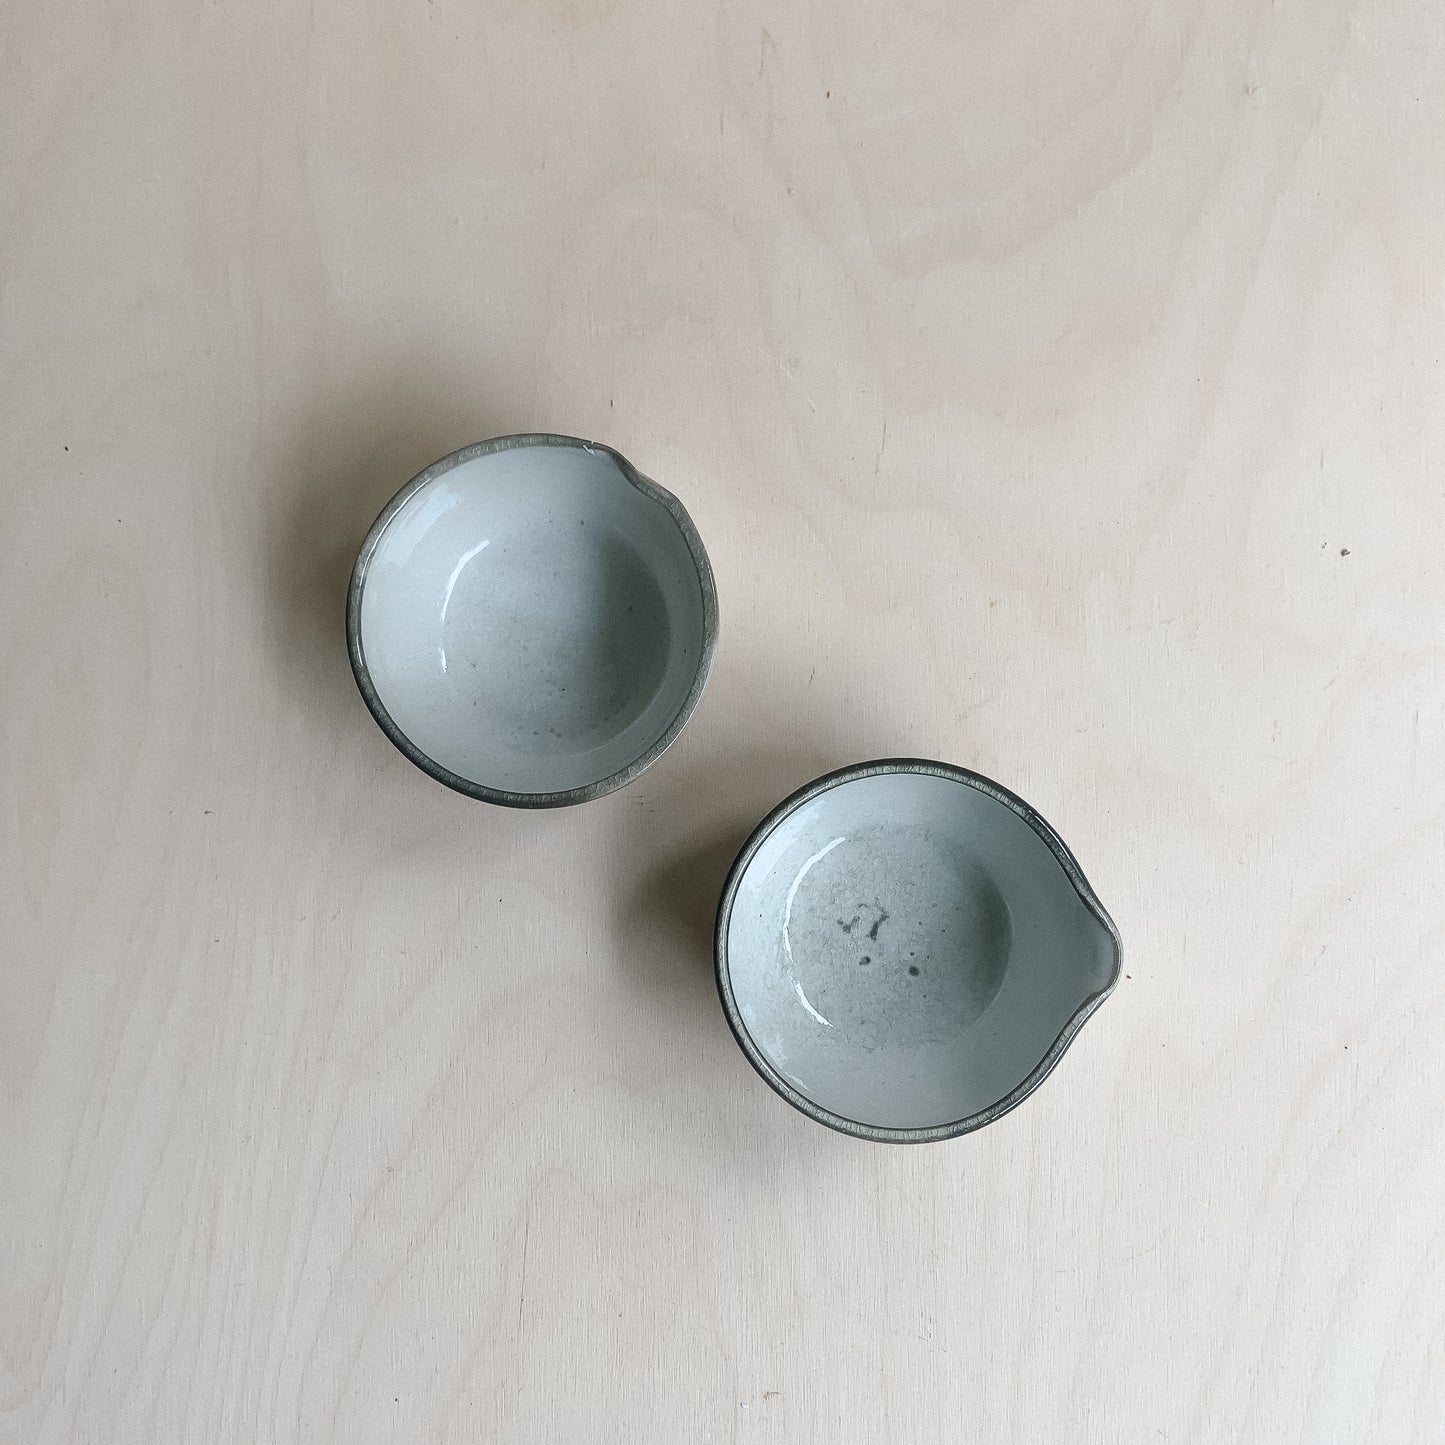 Mini bowl - prep set, wood fired